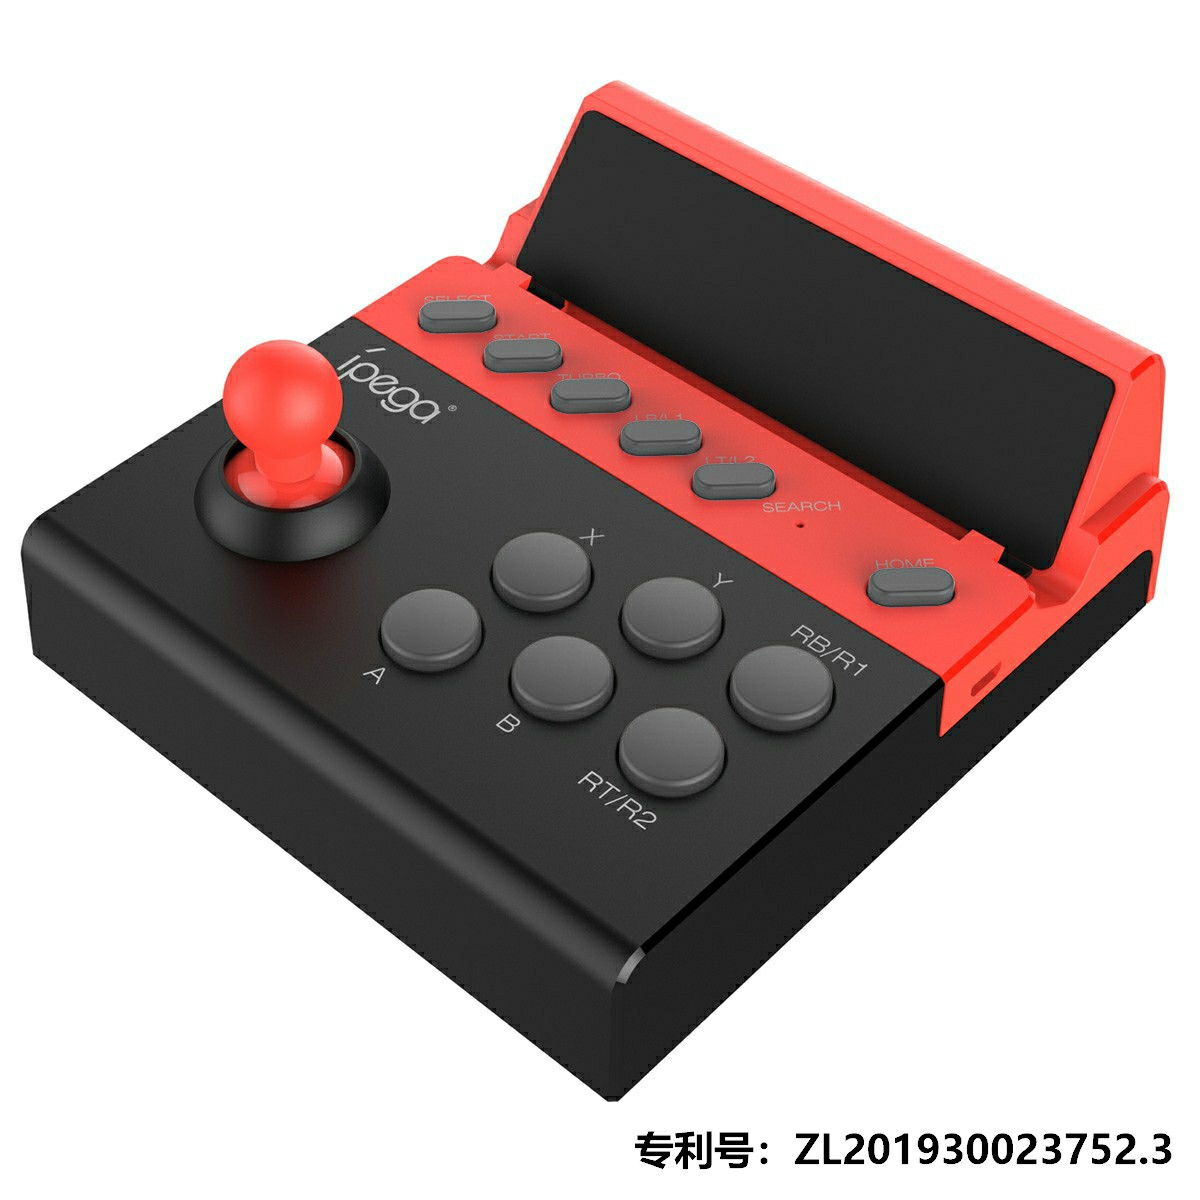 Ipega 9135 mobile phone mini Arcade Machine for Fighting Games